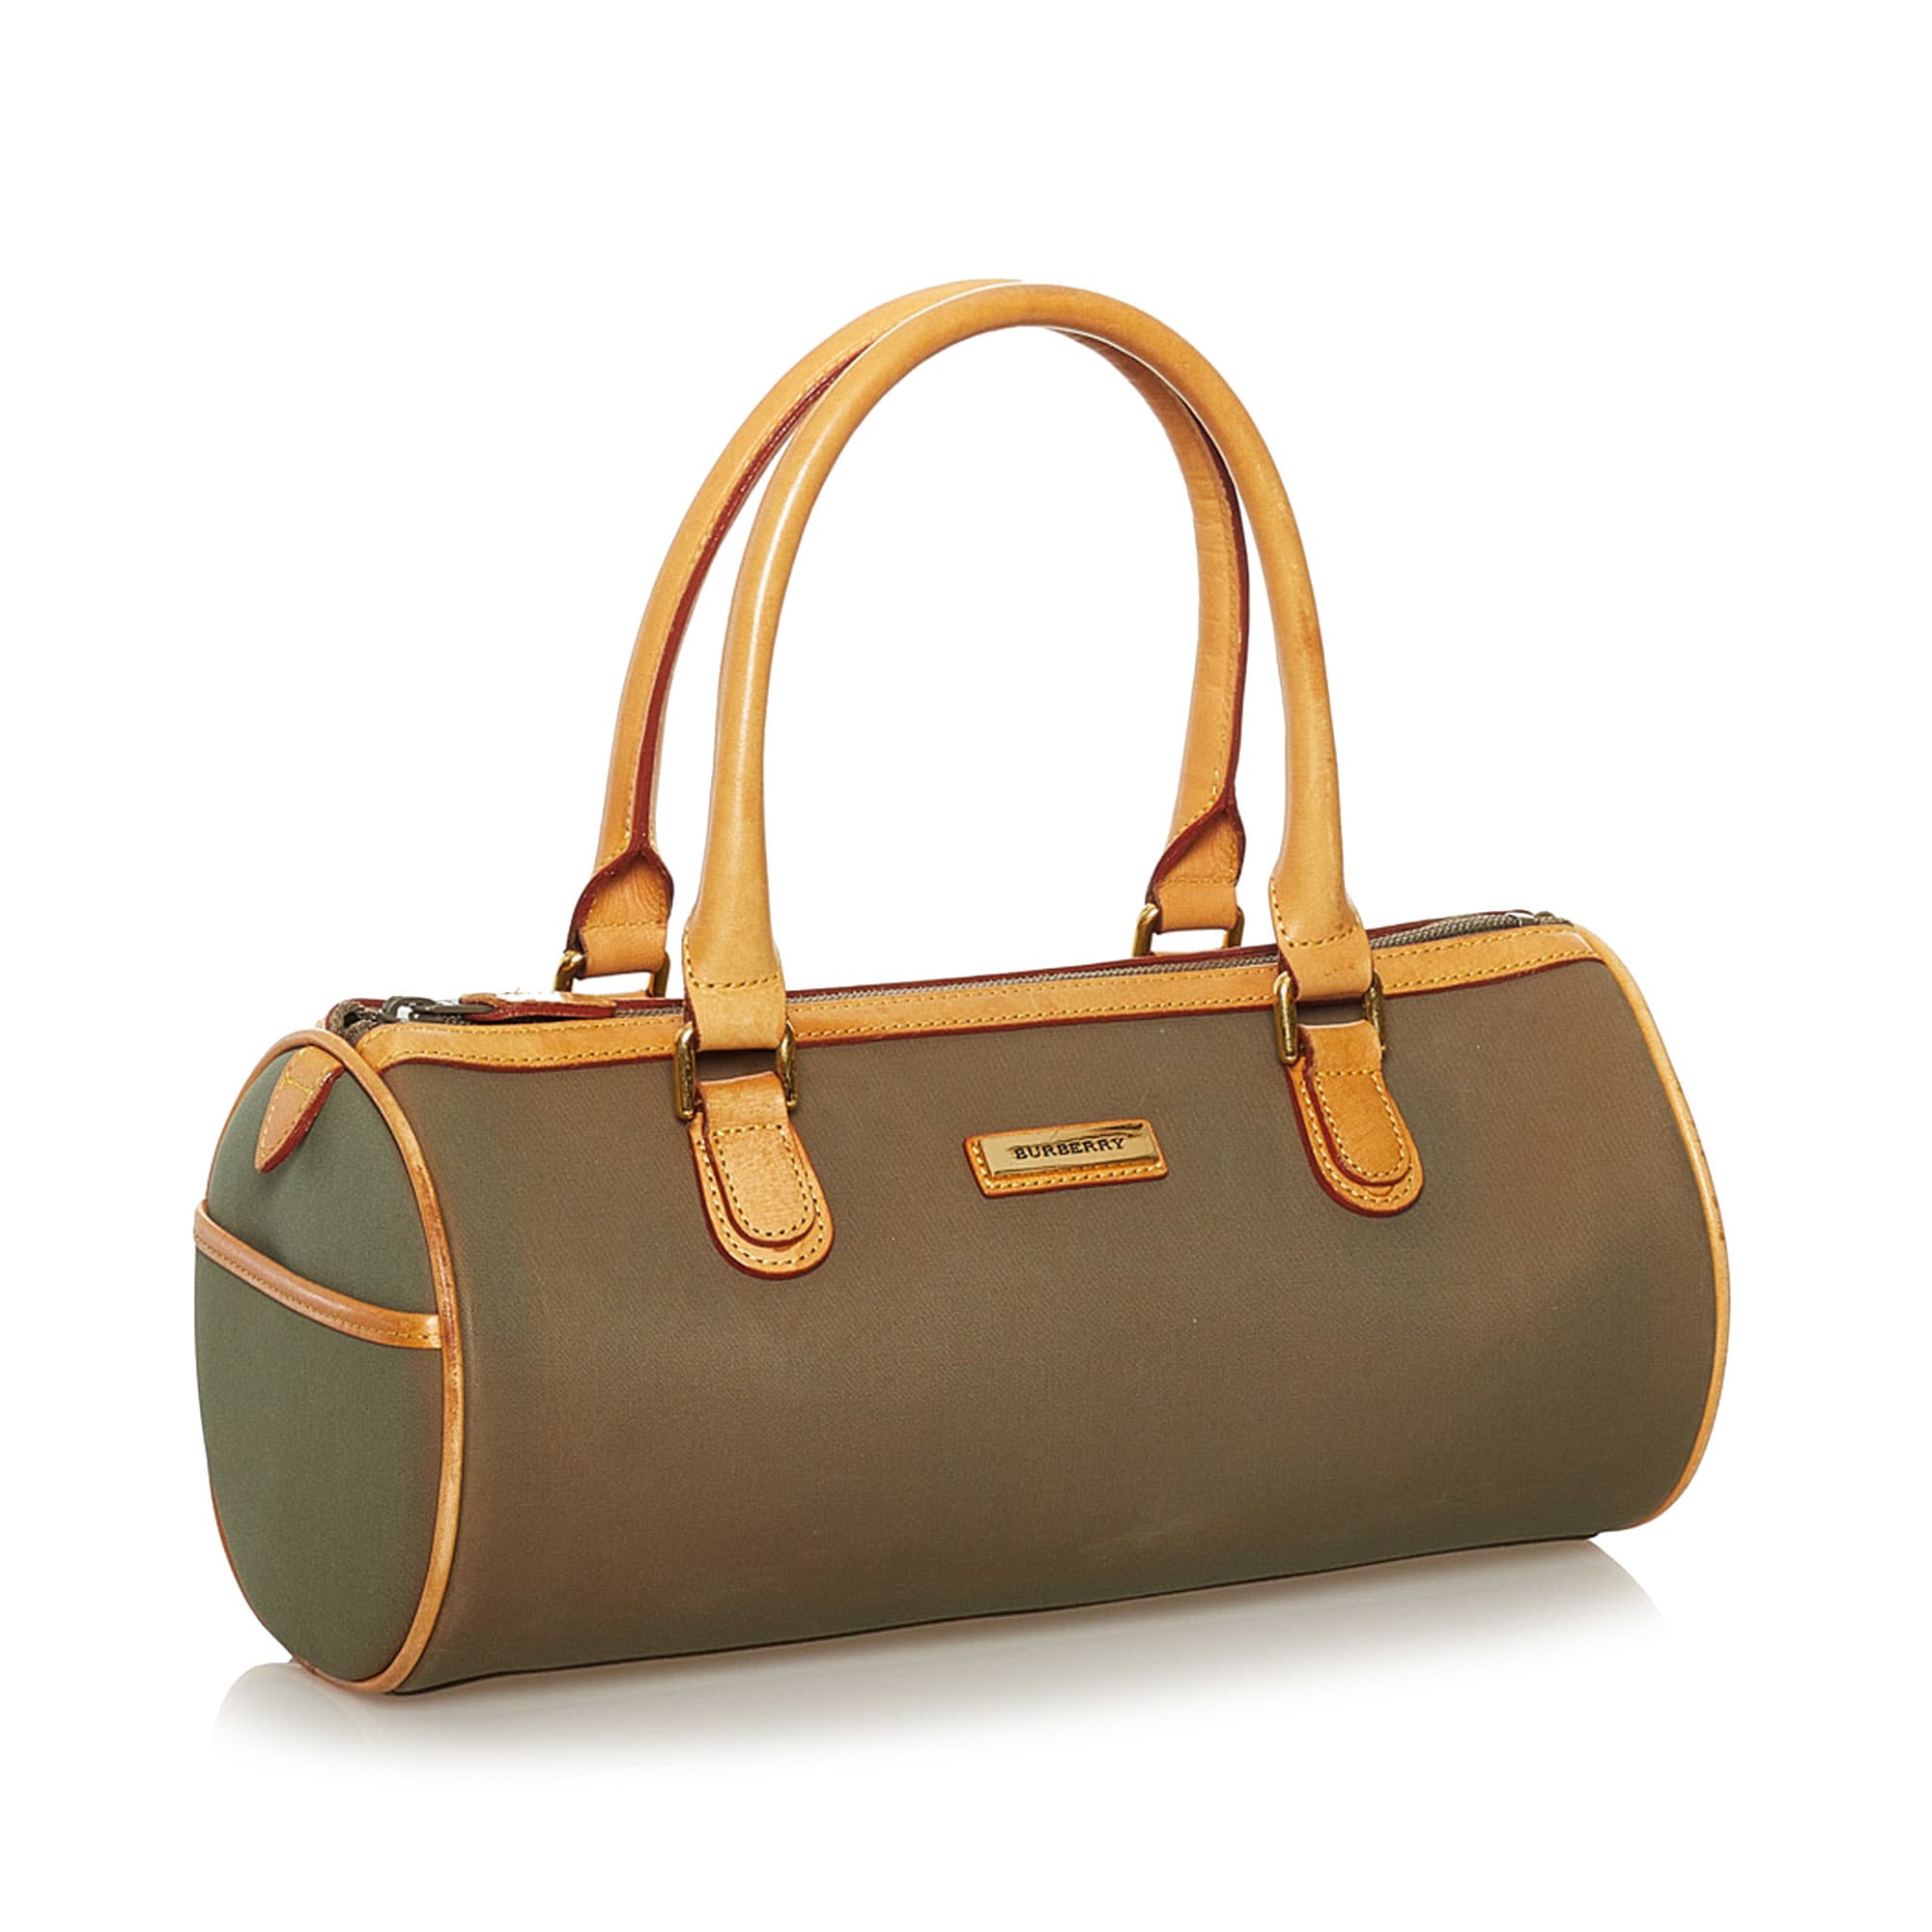 Burberry Leather Handbag, ONESIZE, brown